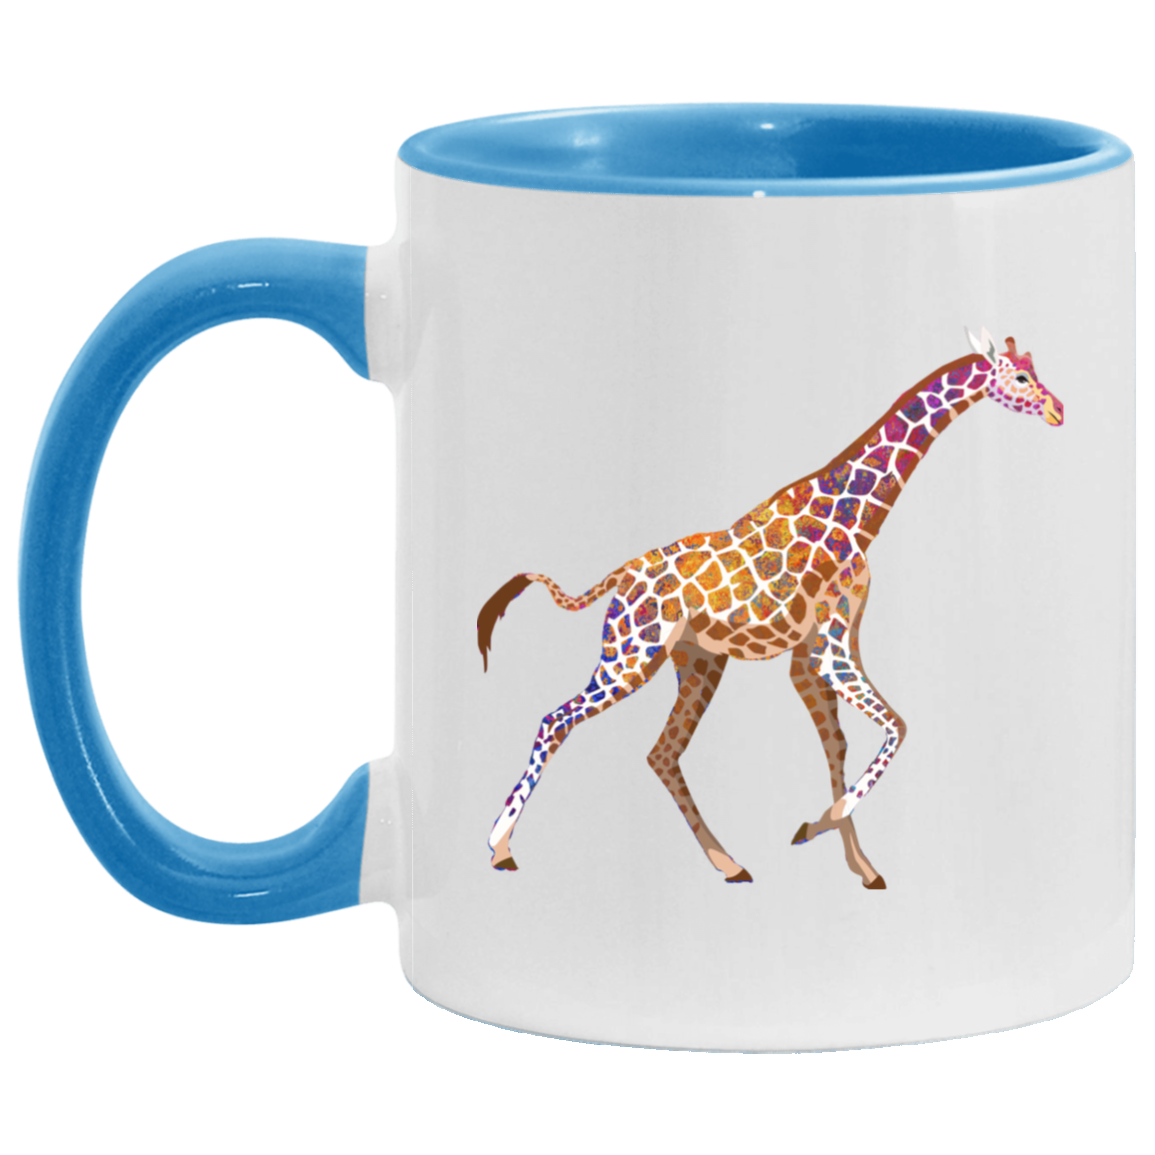 Colorful Giraffe - Mugs